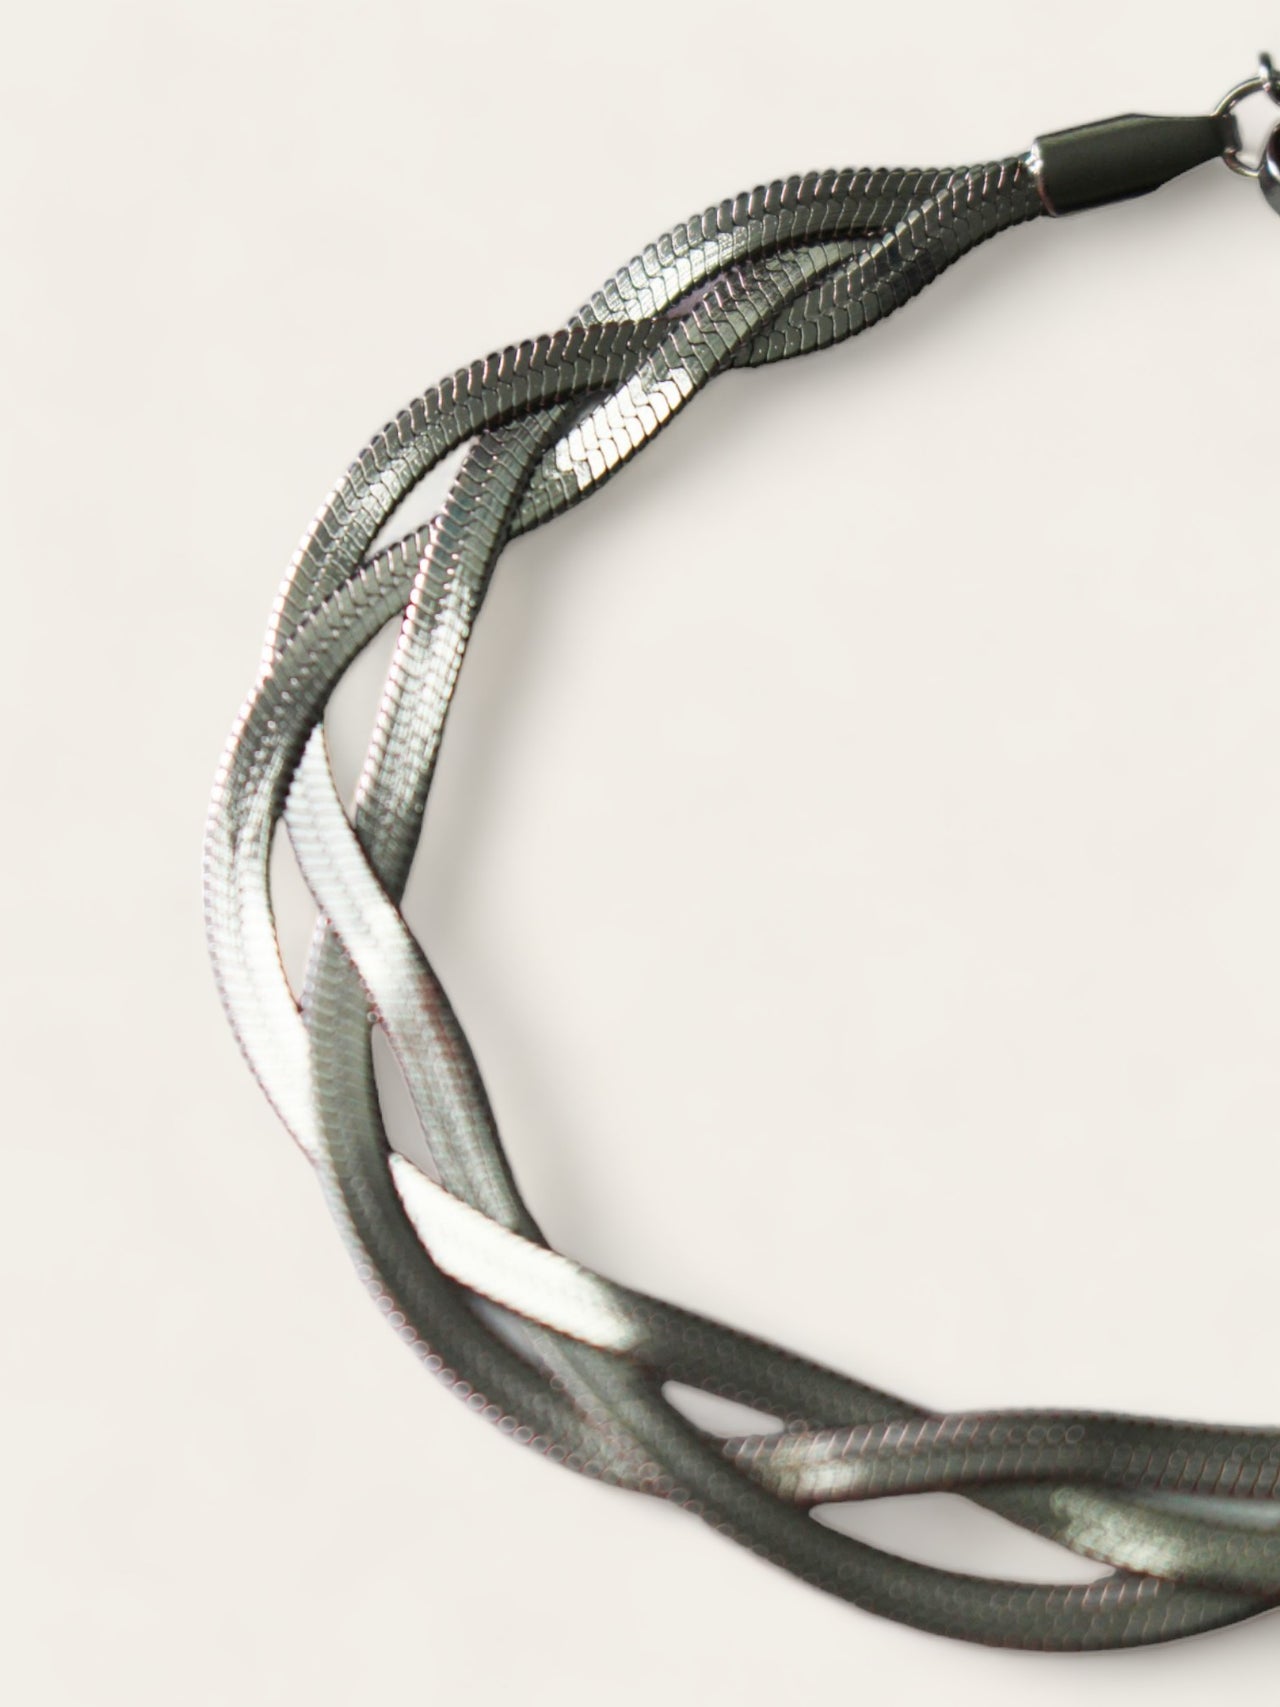 Silver Twisted Herringbone Bracelet